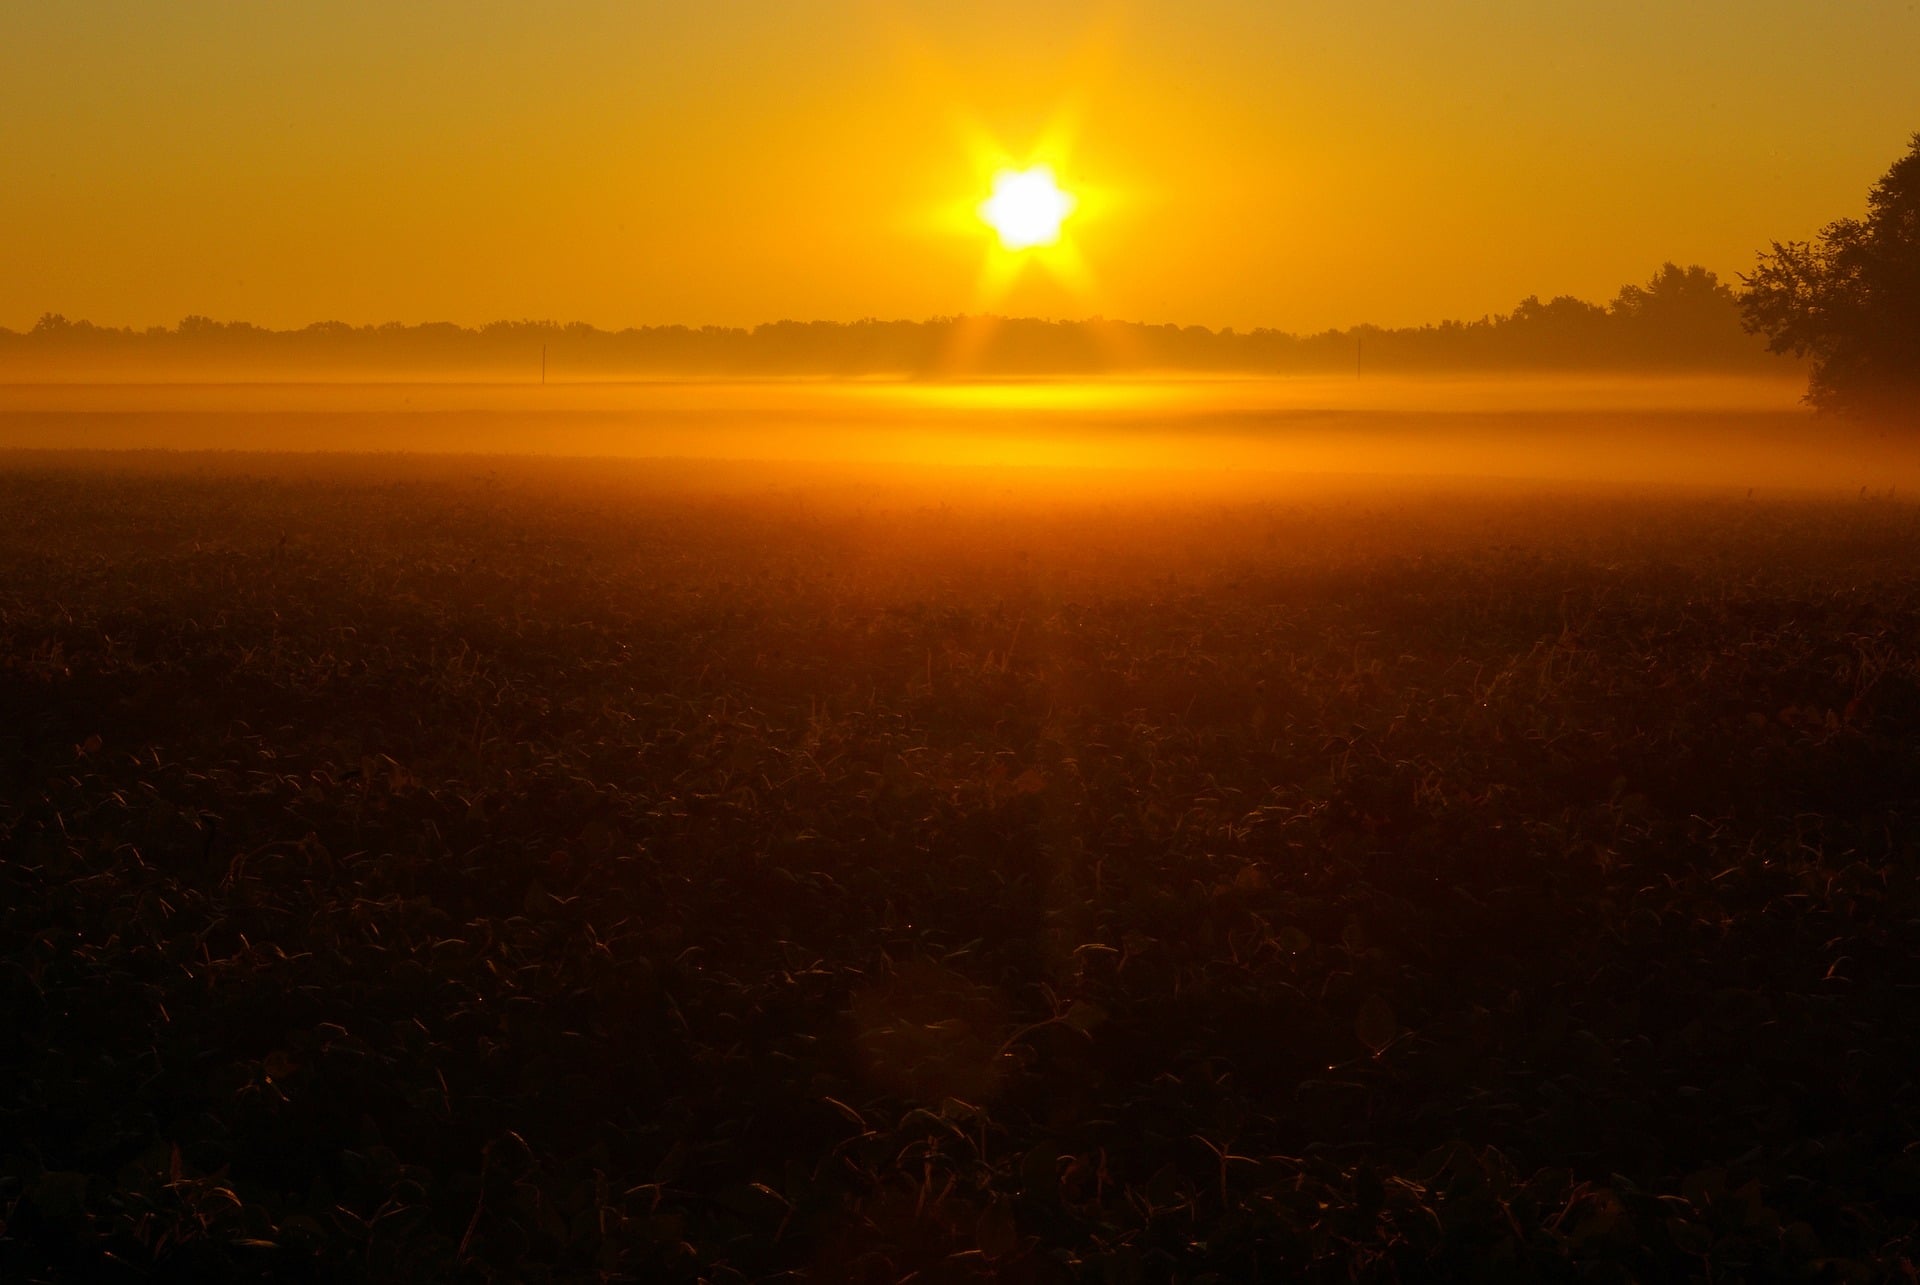 Sunrise over field